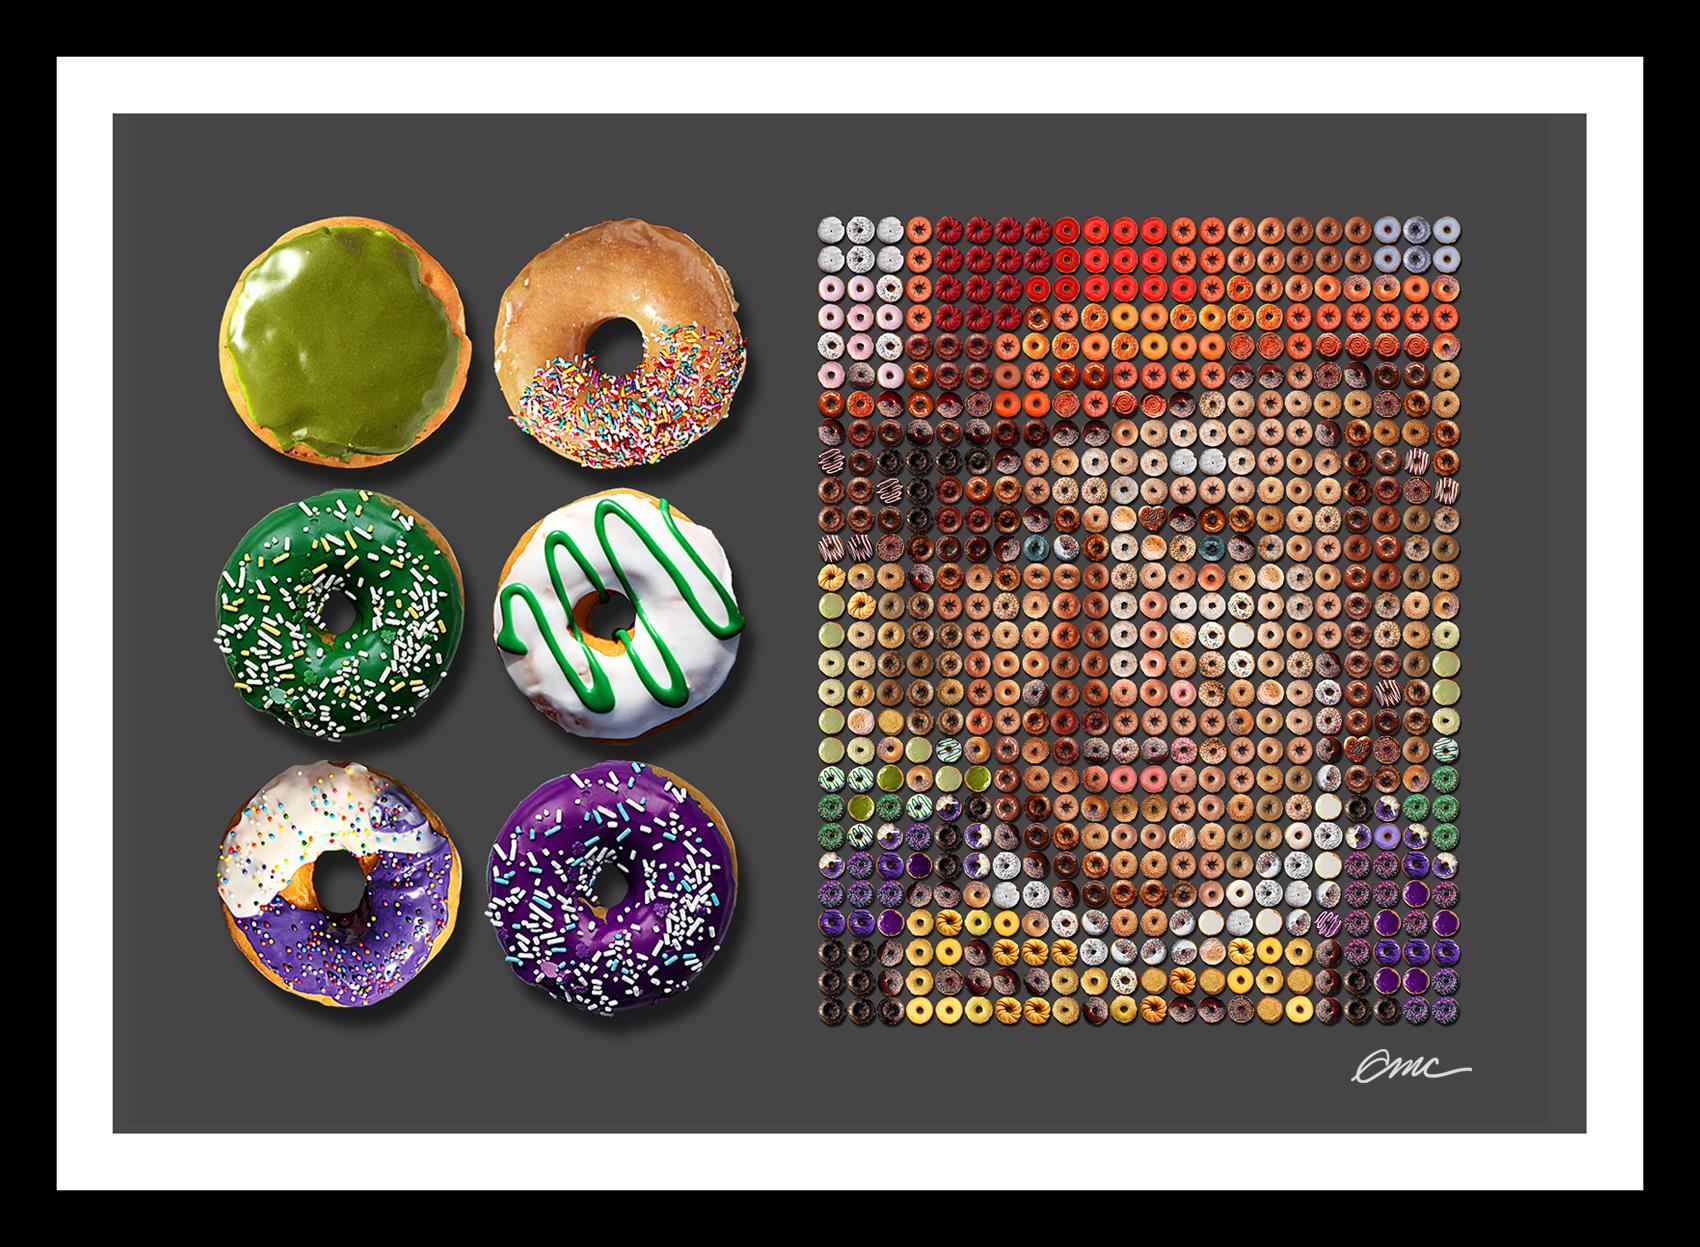 Candice CMC Portrait Photograph - "Wonka Donuts with Half Dozen" Photographic arrangement portrait with donuts